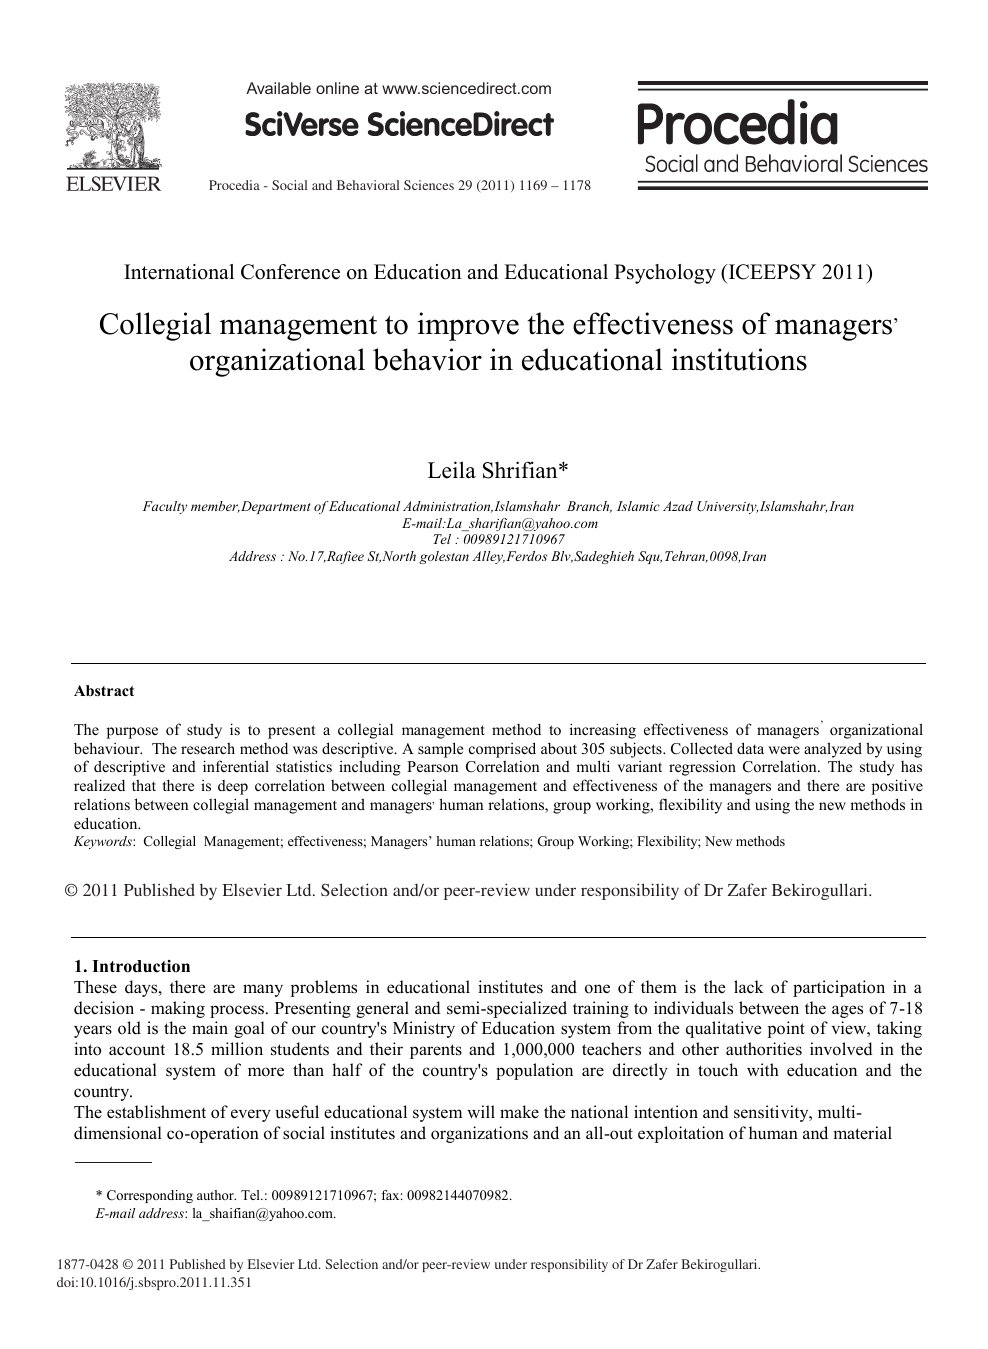 research paper topics for organizational leadership